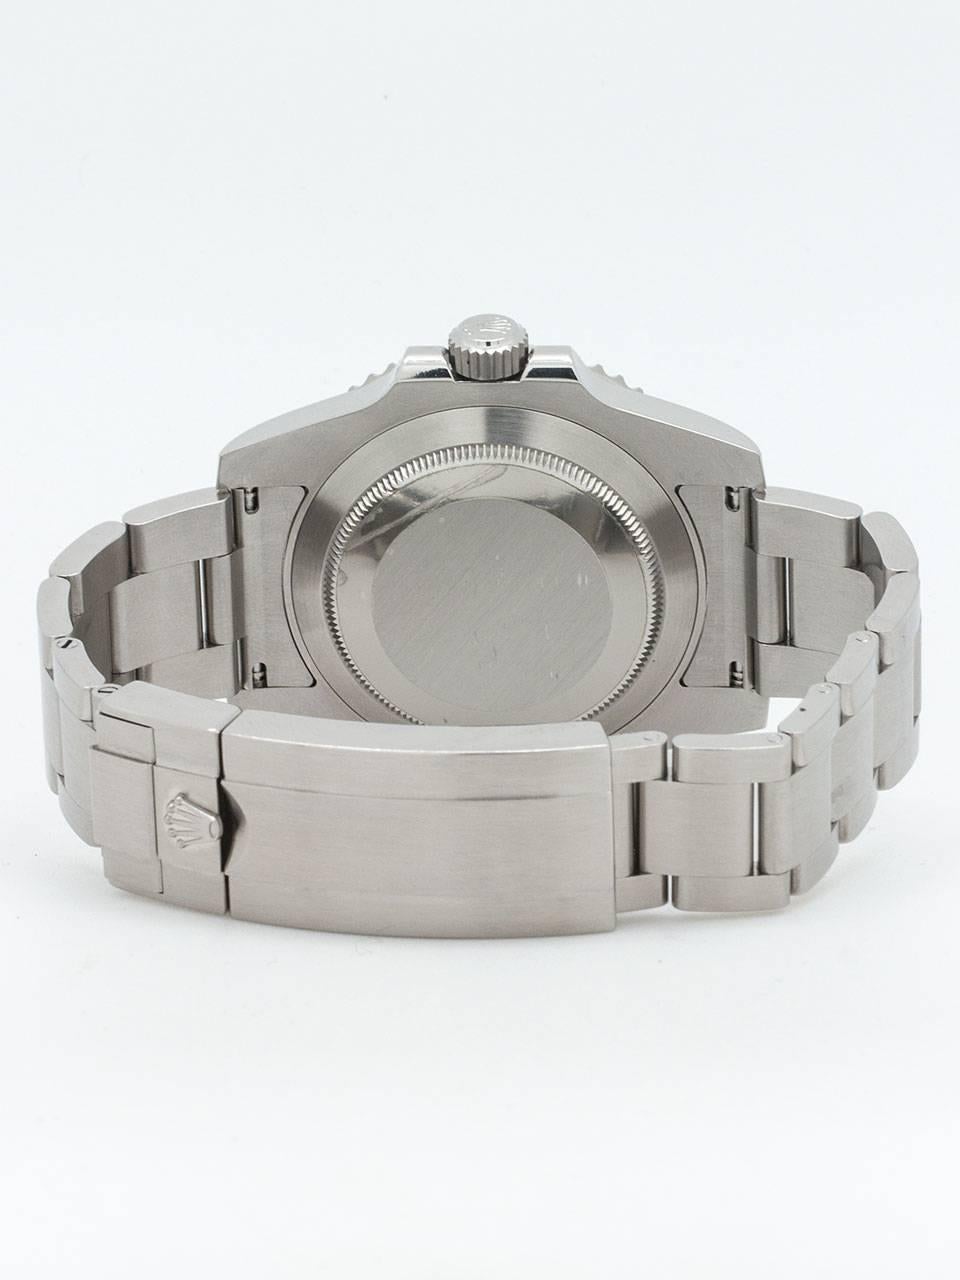 Men's Rolex Stainless Steel Submariner “The Hulk” Self Winding Wristwatch Ref 116610LV